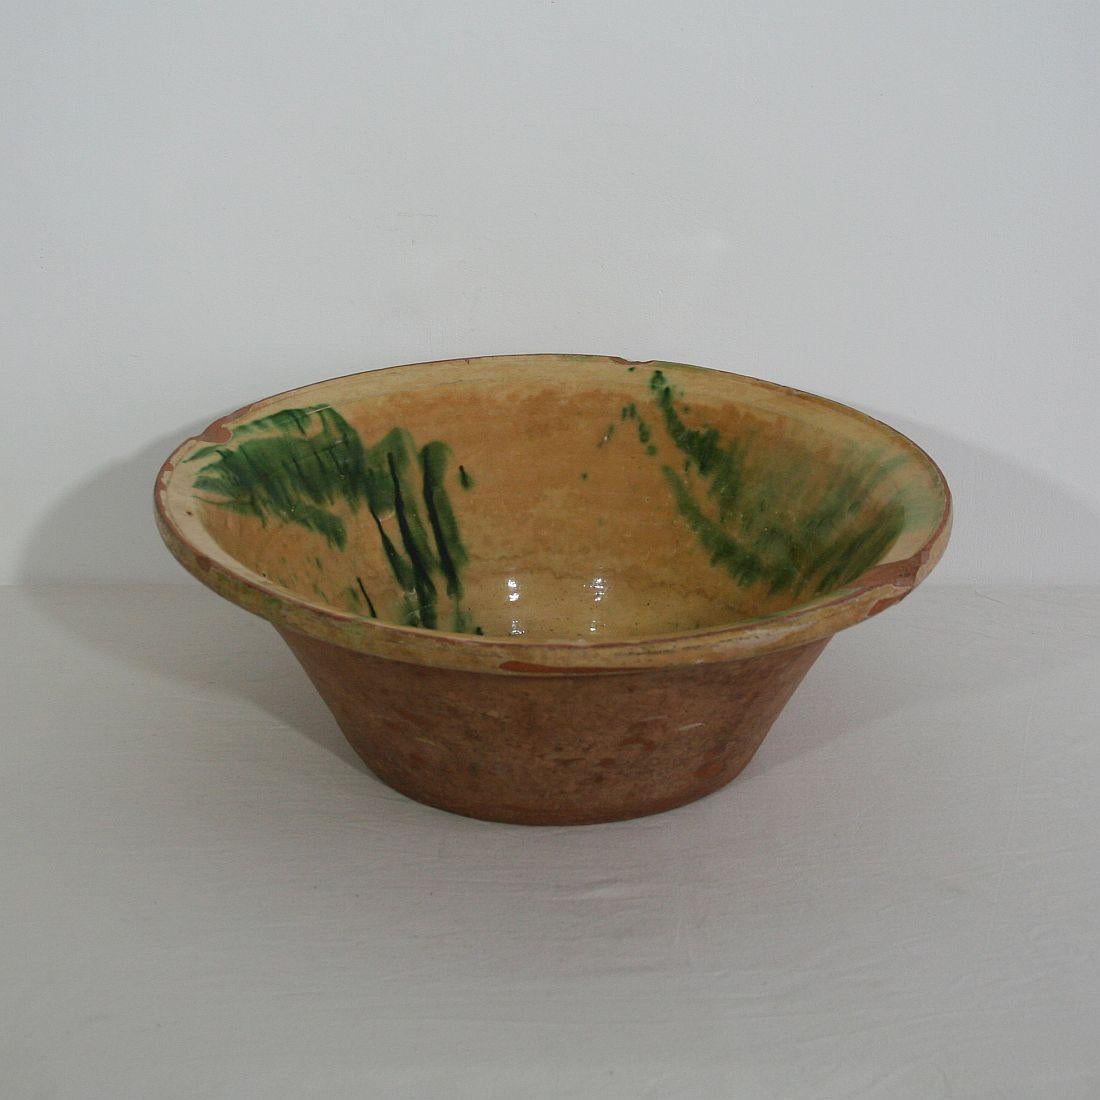 19th Century Spanish Glazed Terracotta Bowl (Handgefertigt)